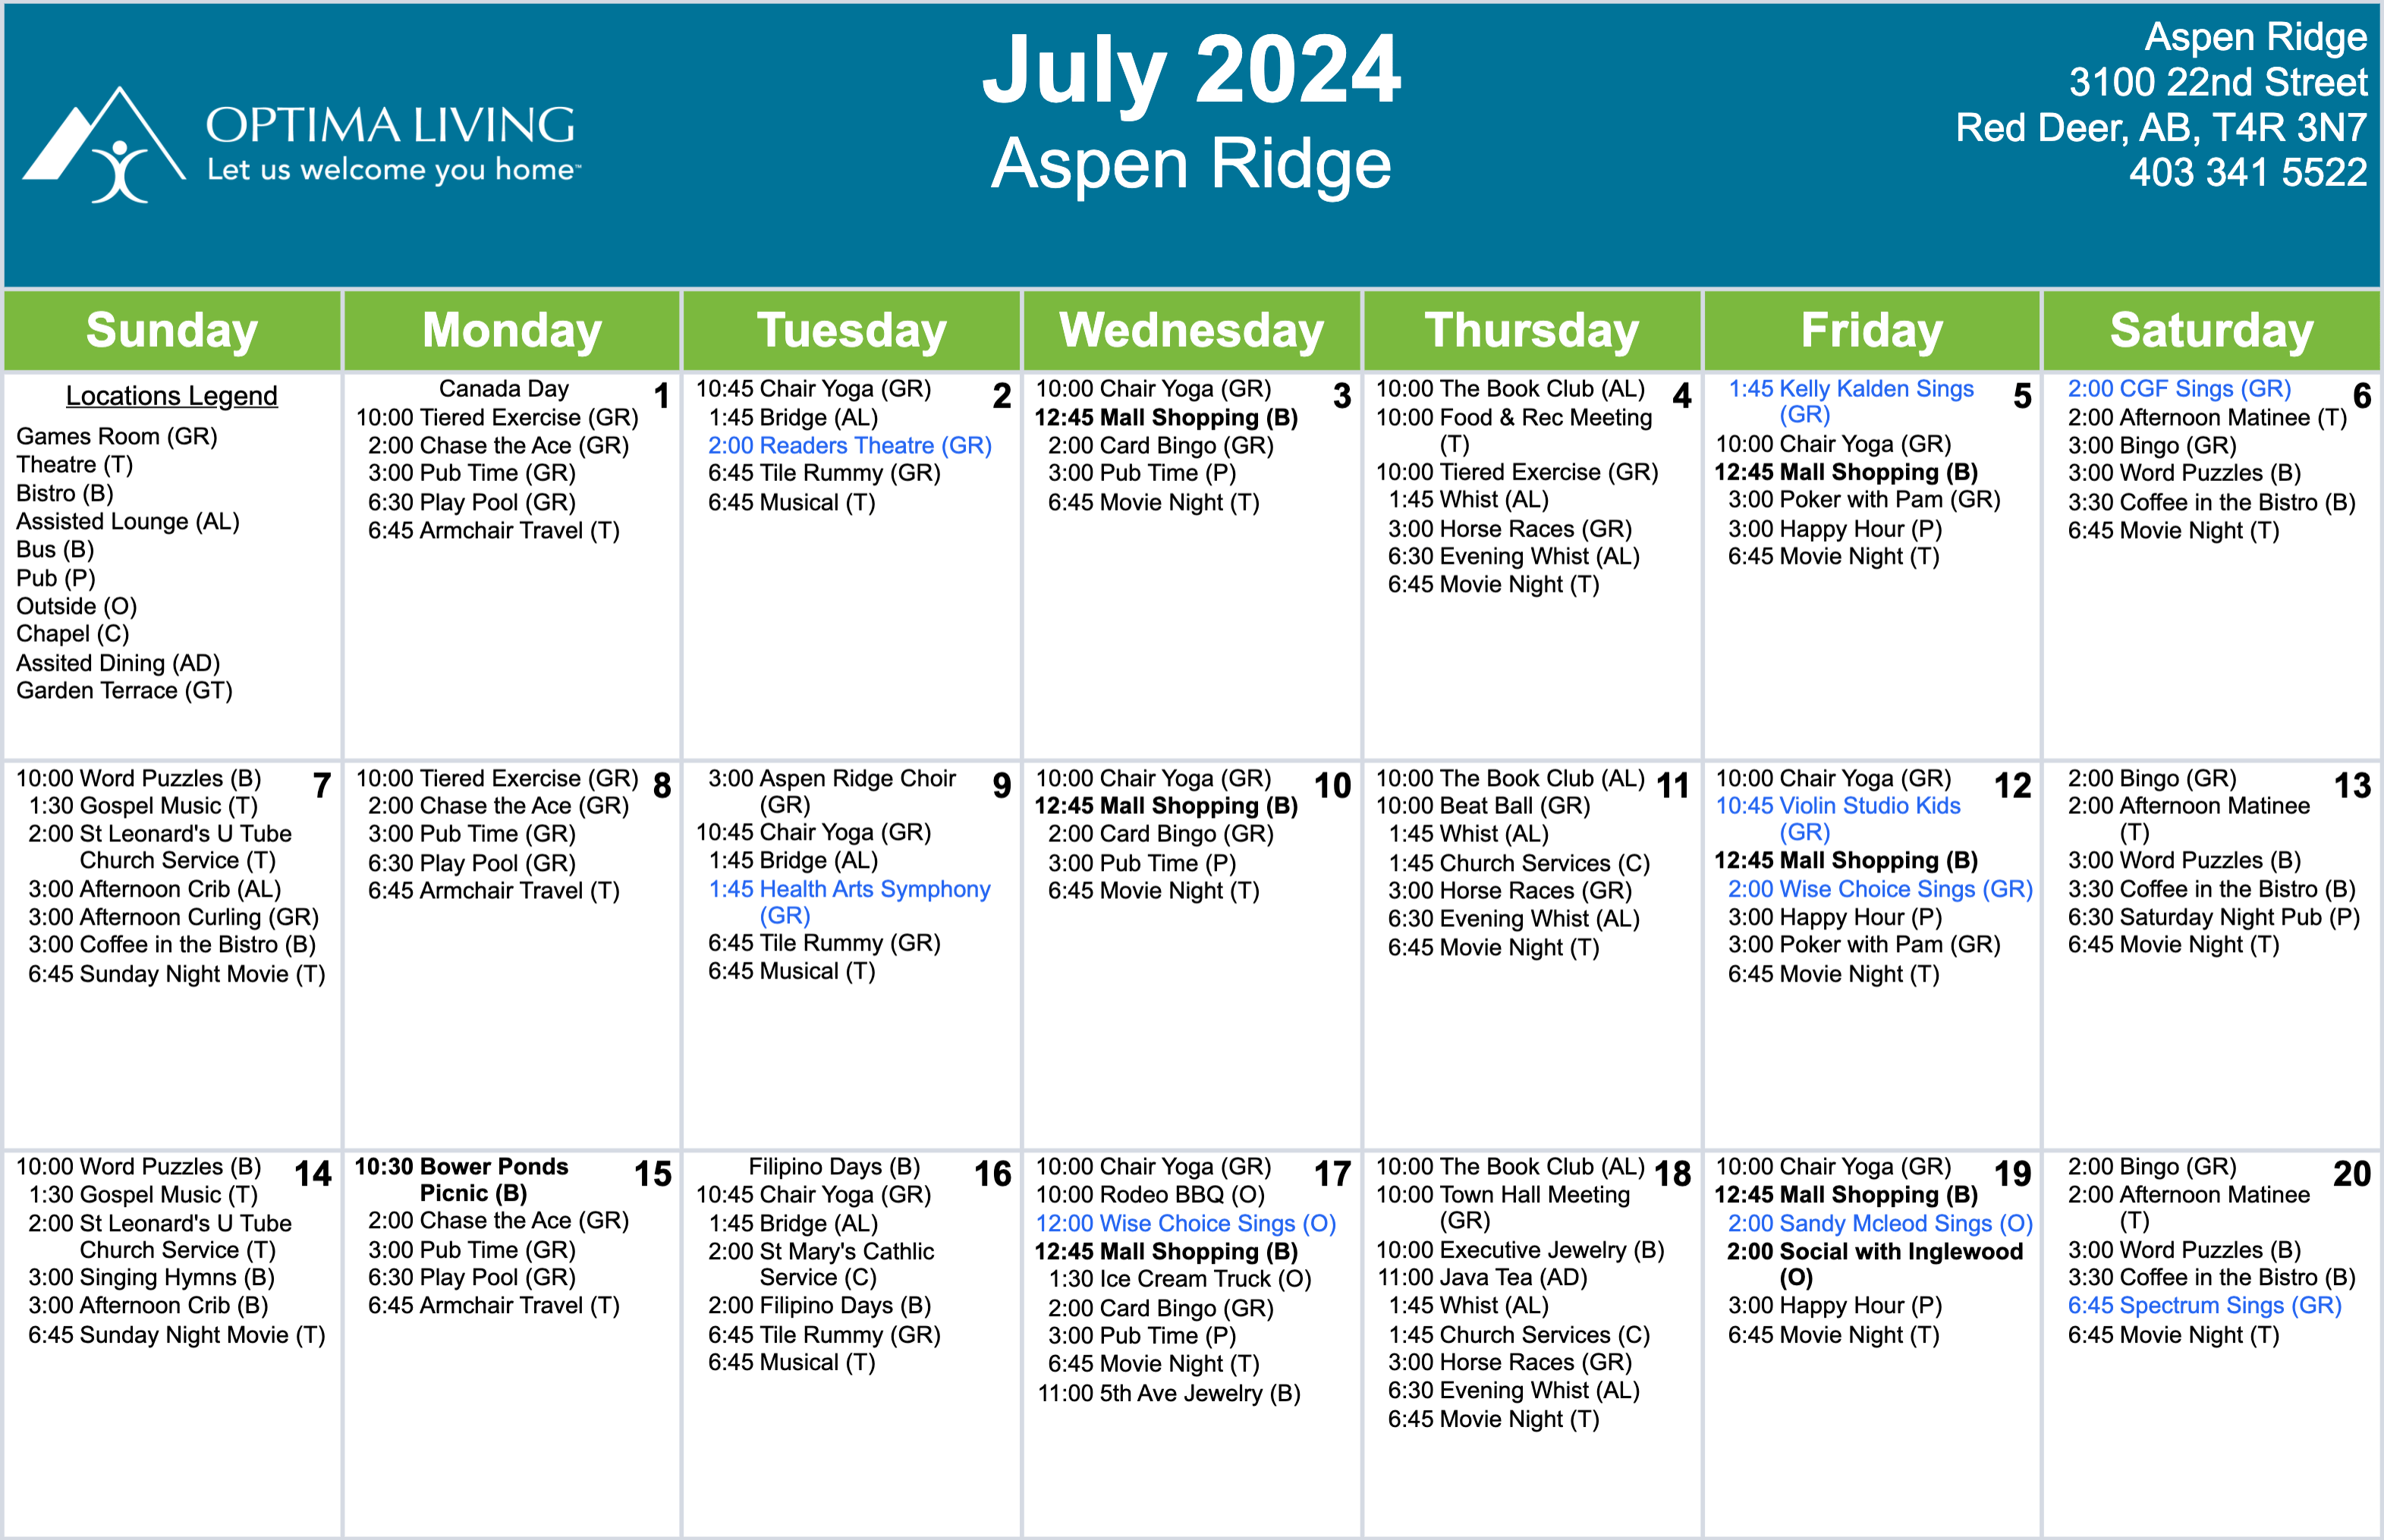 Aspen Ridge July 1 - 20 2024 event calendar